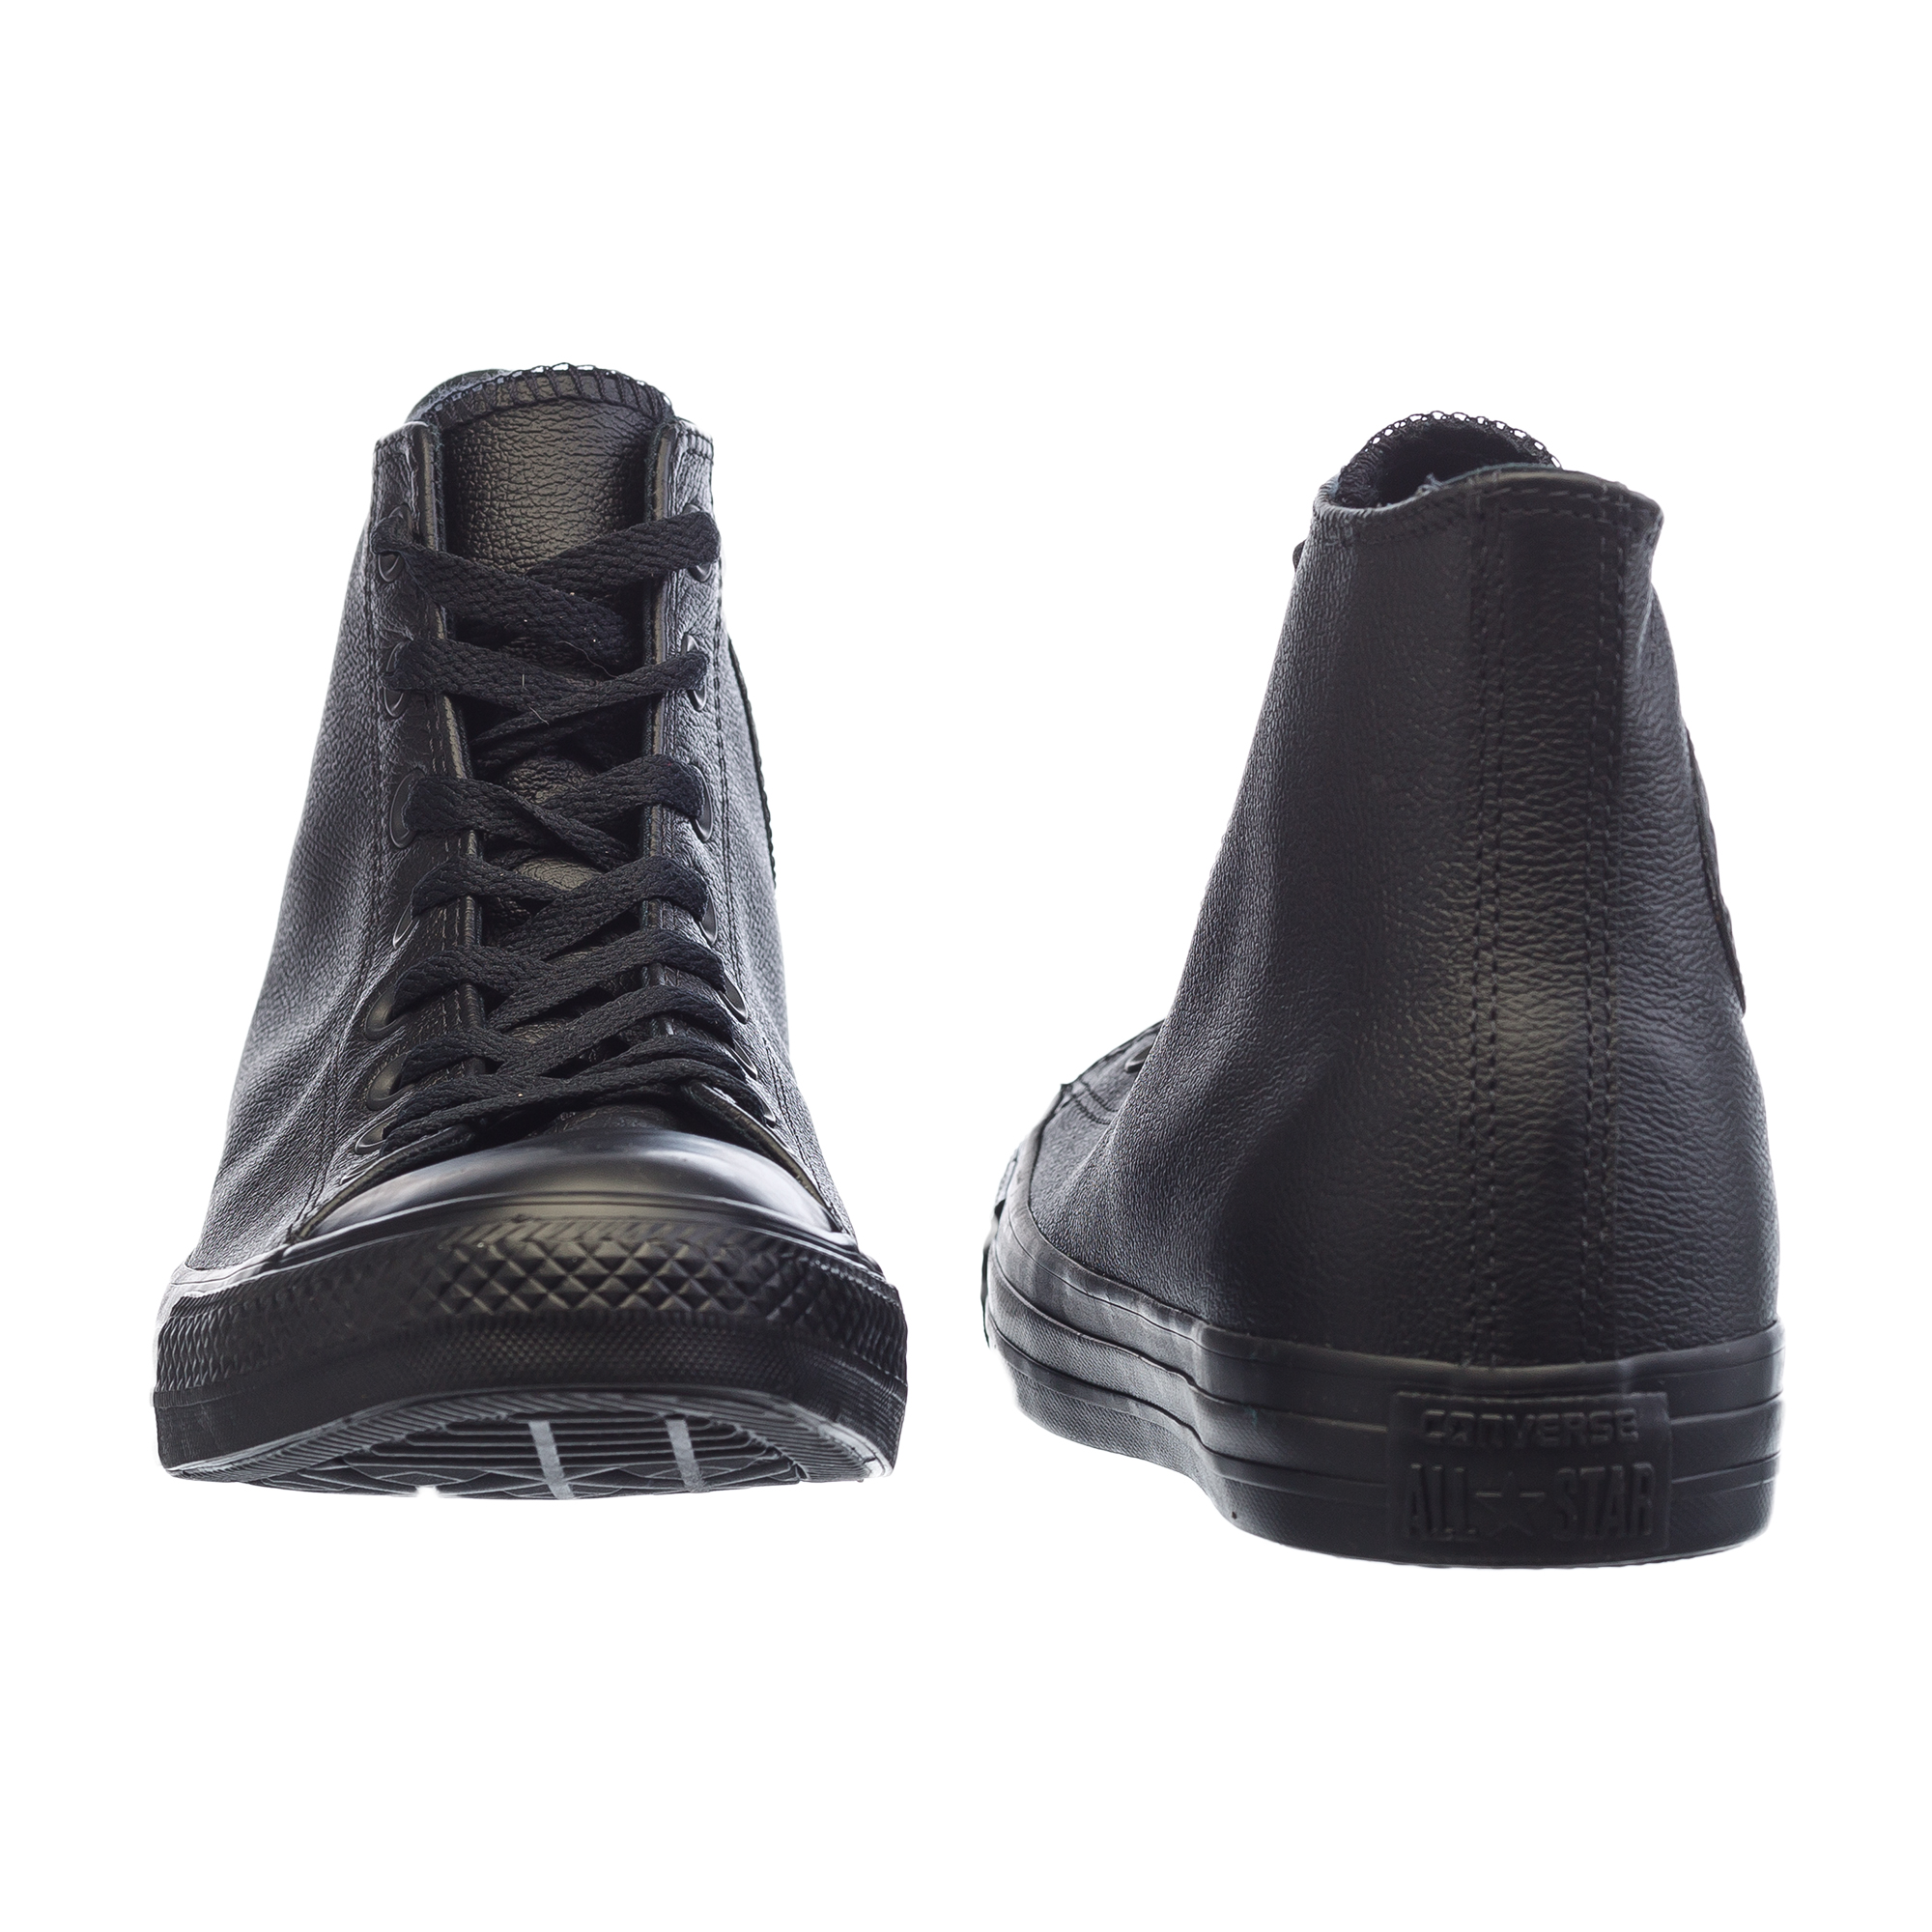 Chuck Taylor All Star Leather CONVERSE, размер 39, цвет черный CV135251 - фото 5